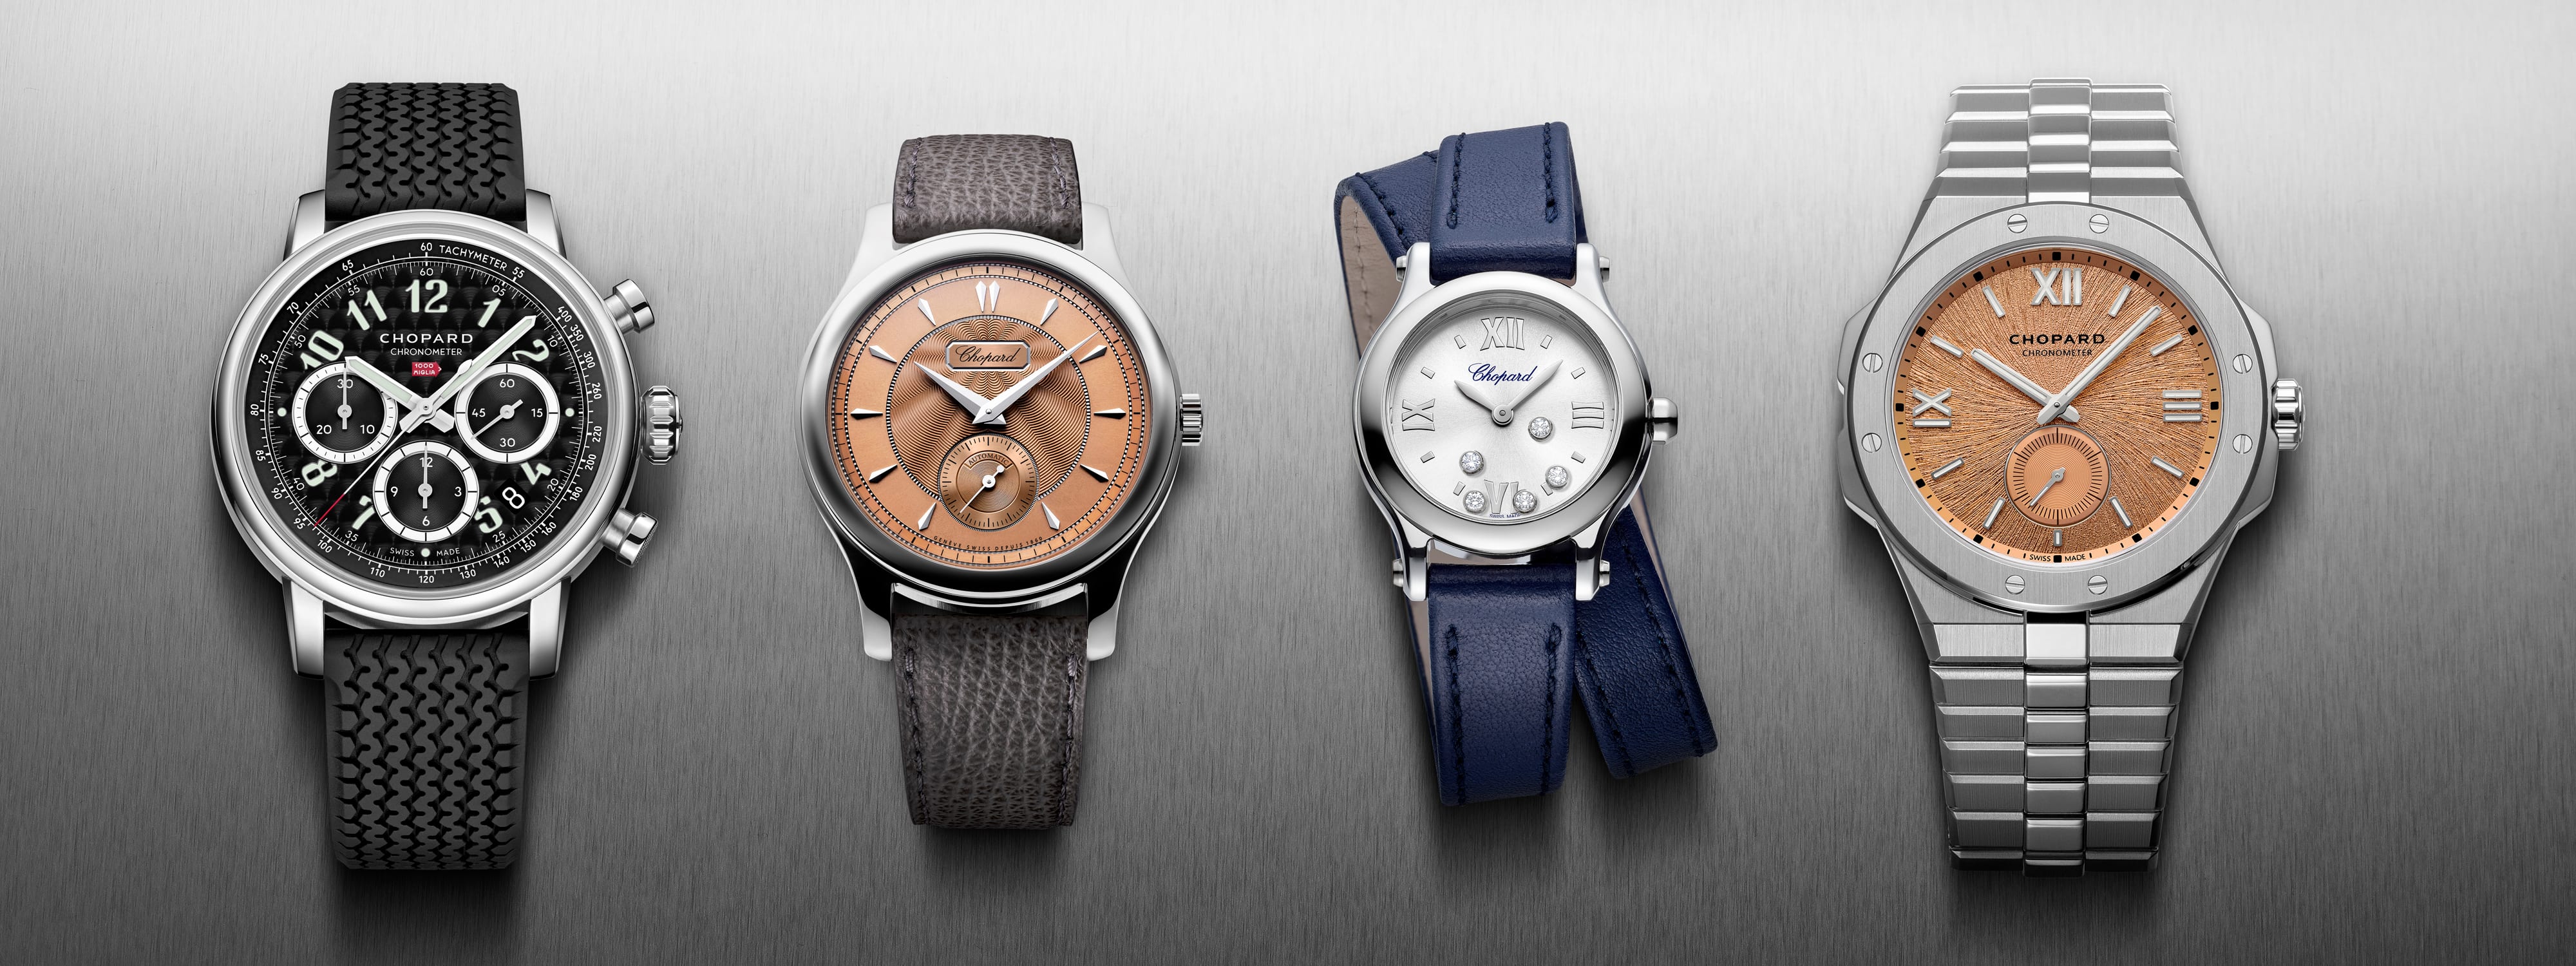 Chopard luxury watch